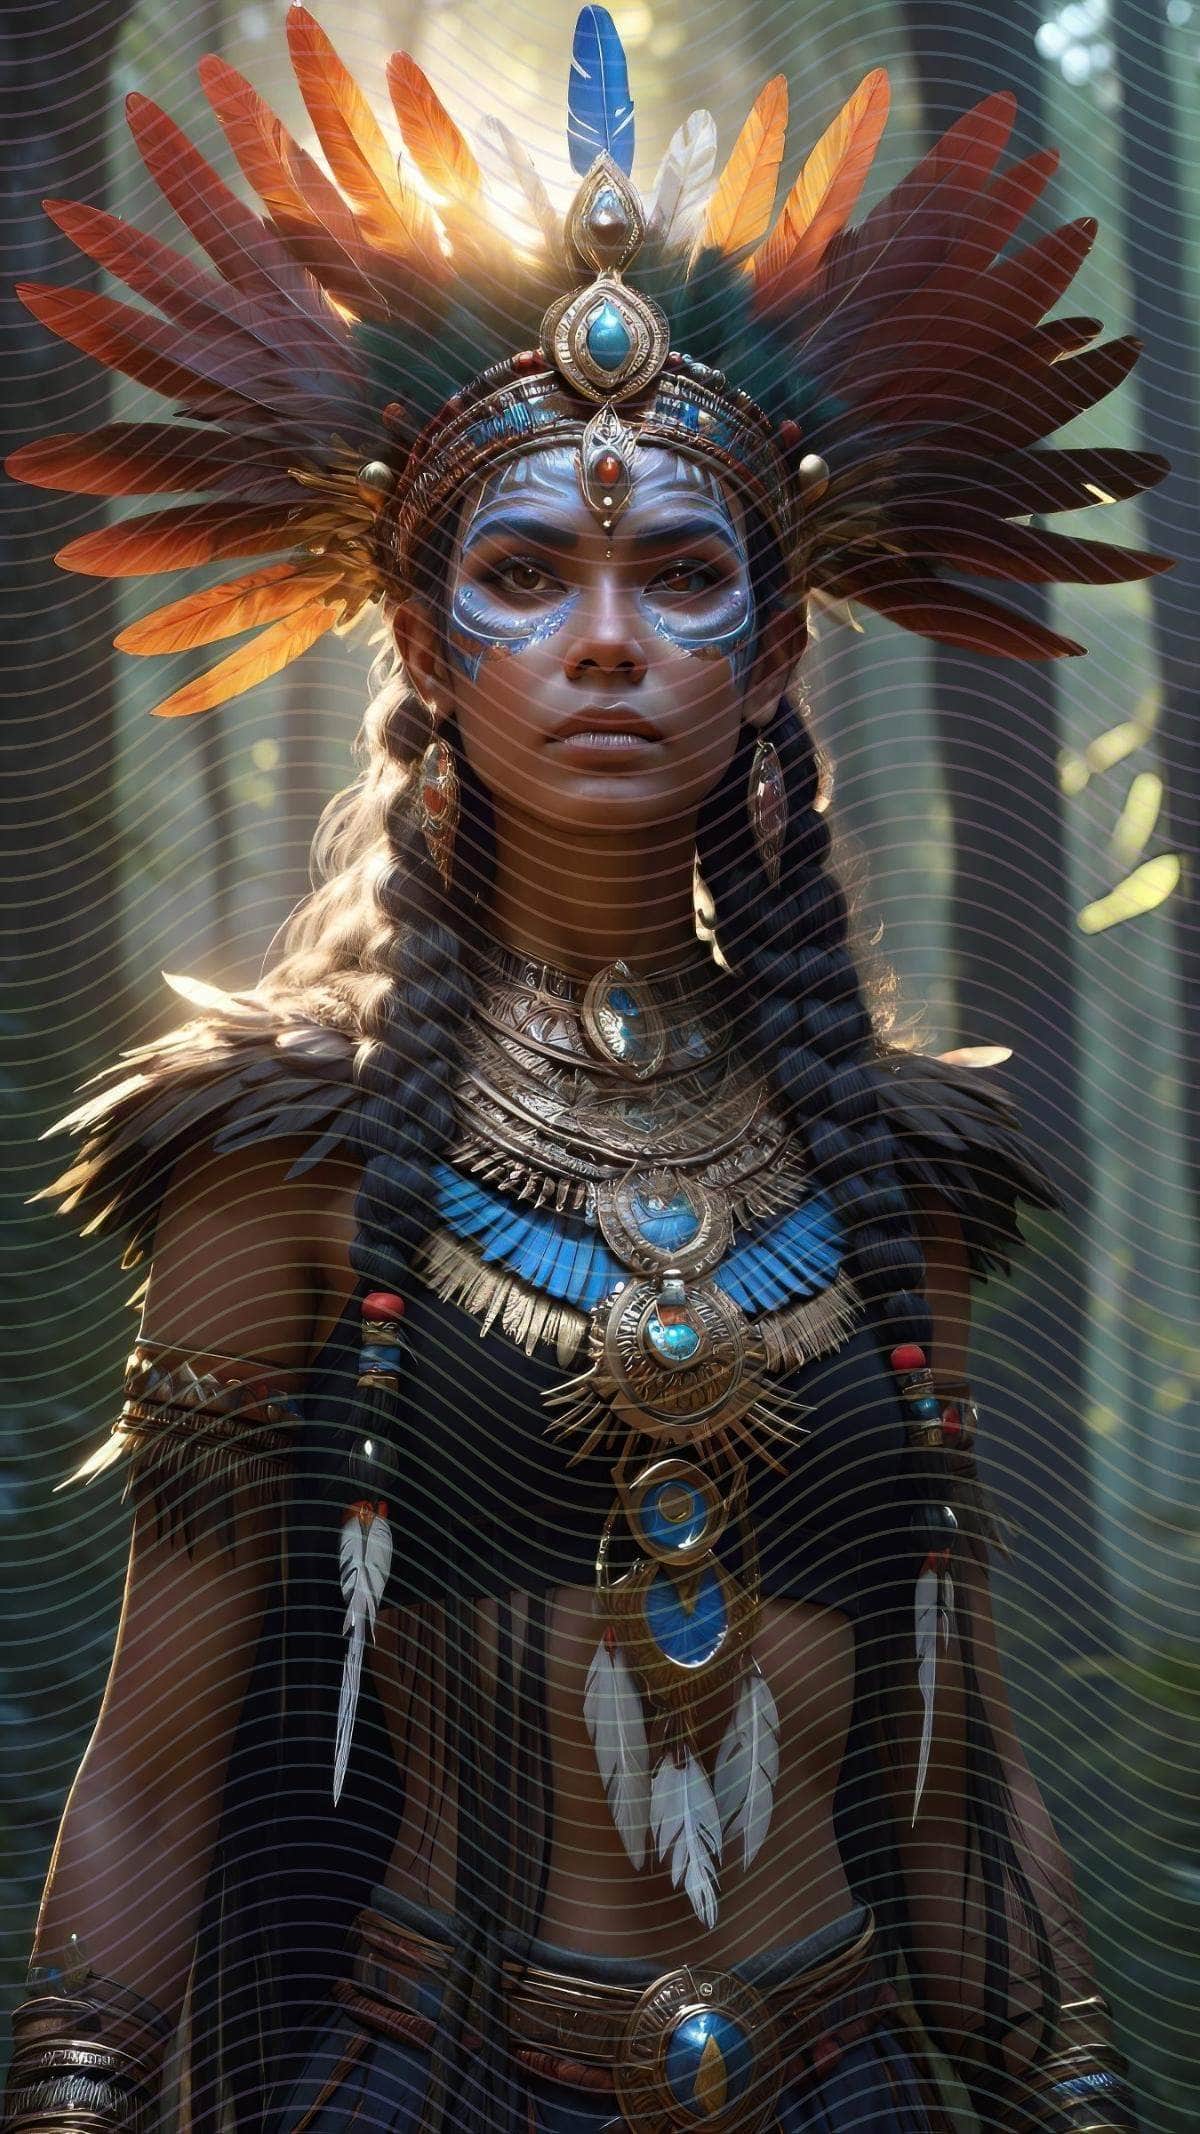 A Beautiful Tribal Woman Queen